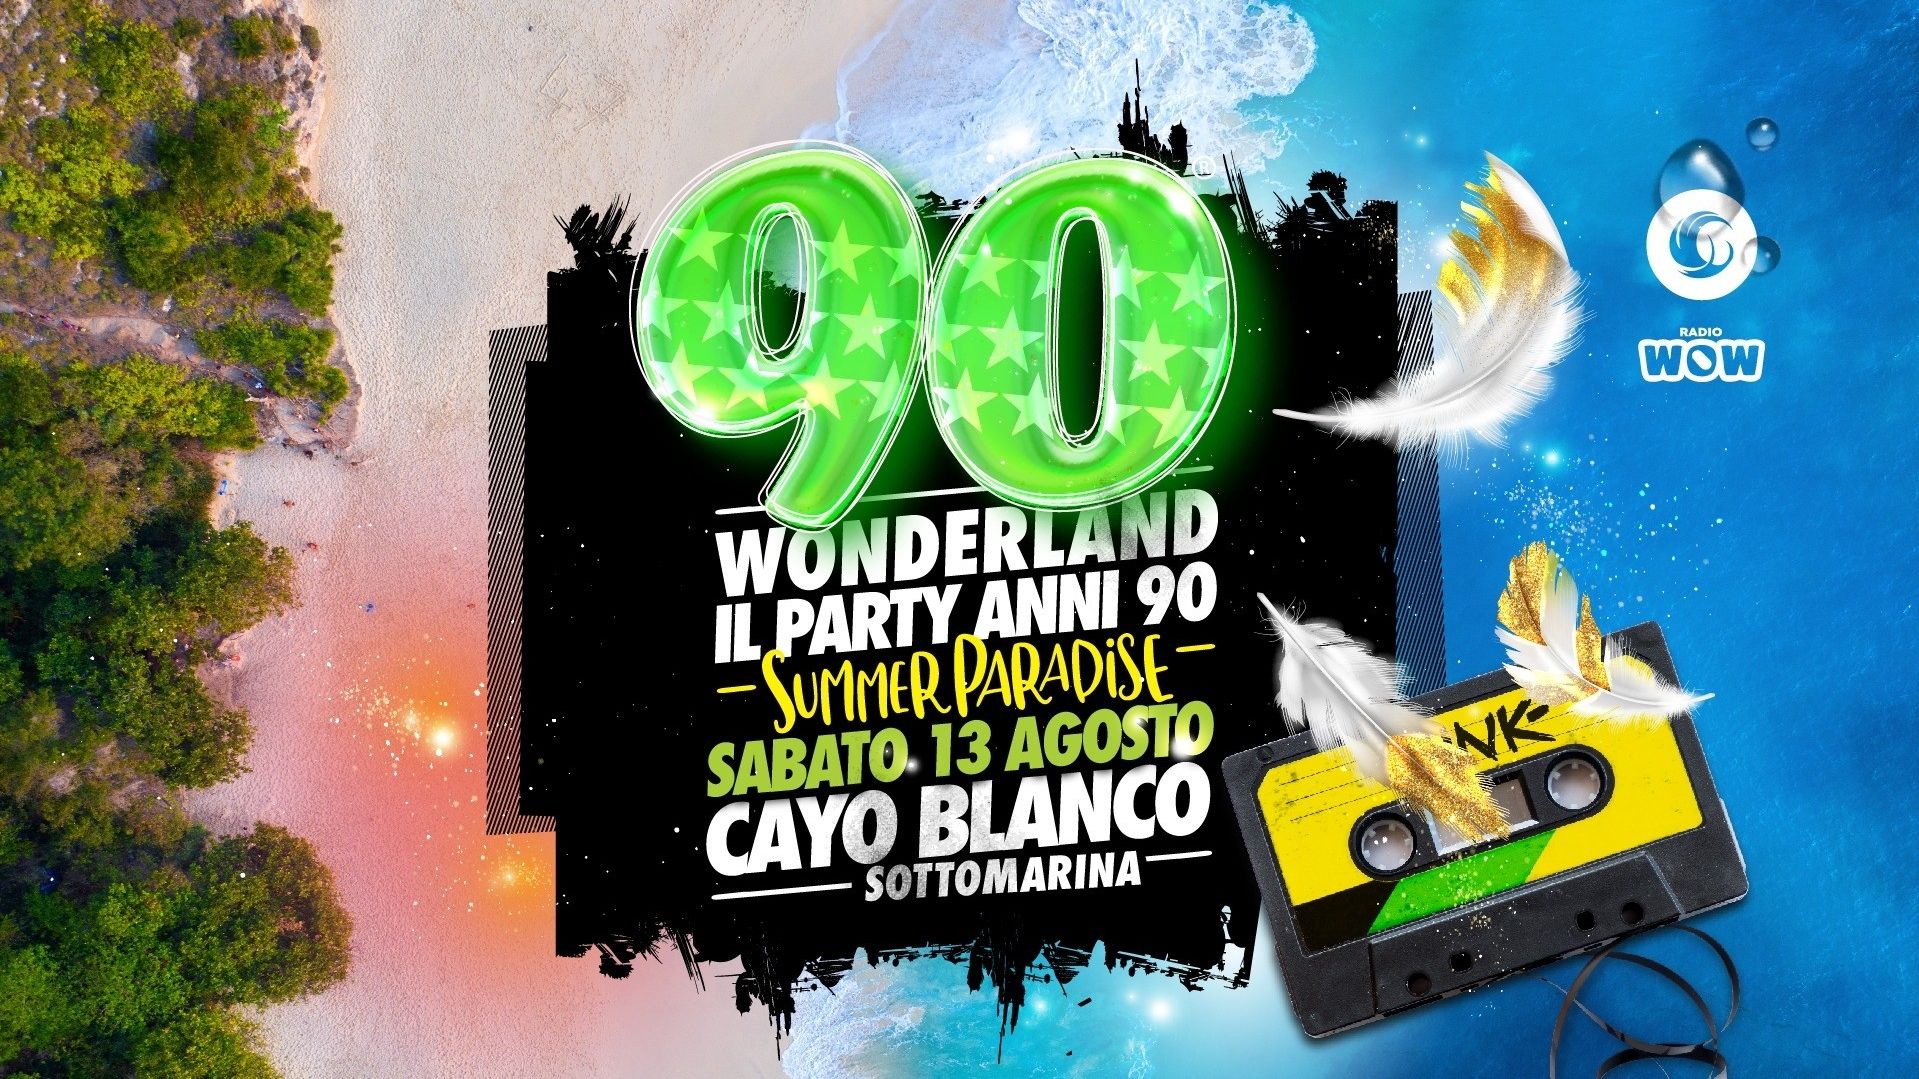 90 Wonderland Sottomarina